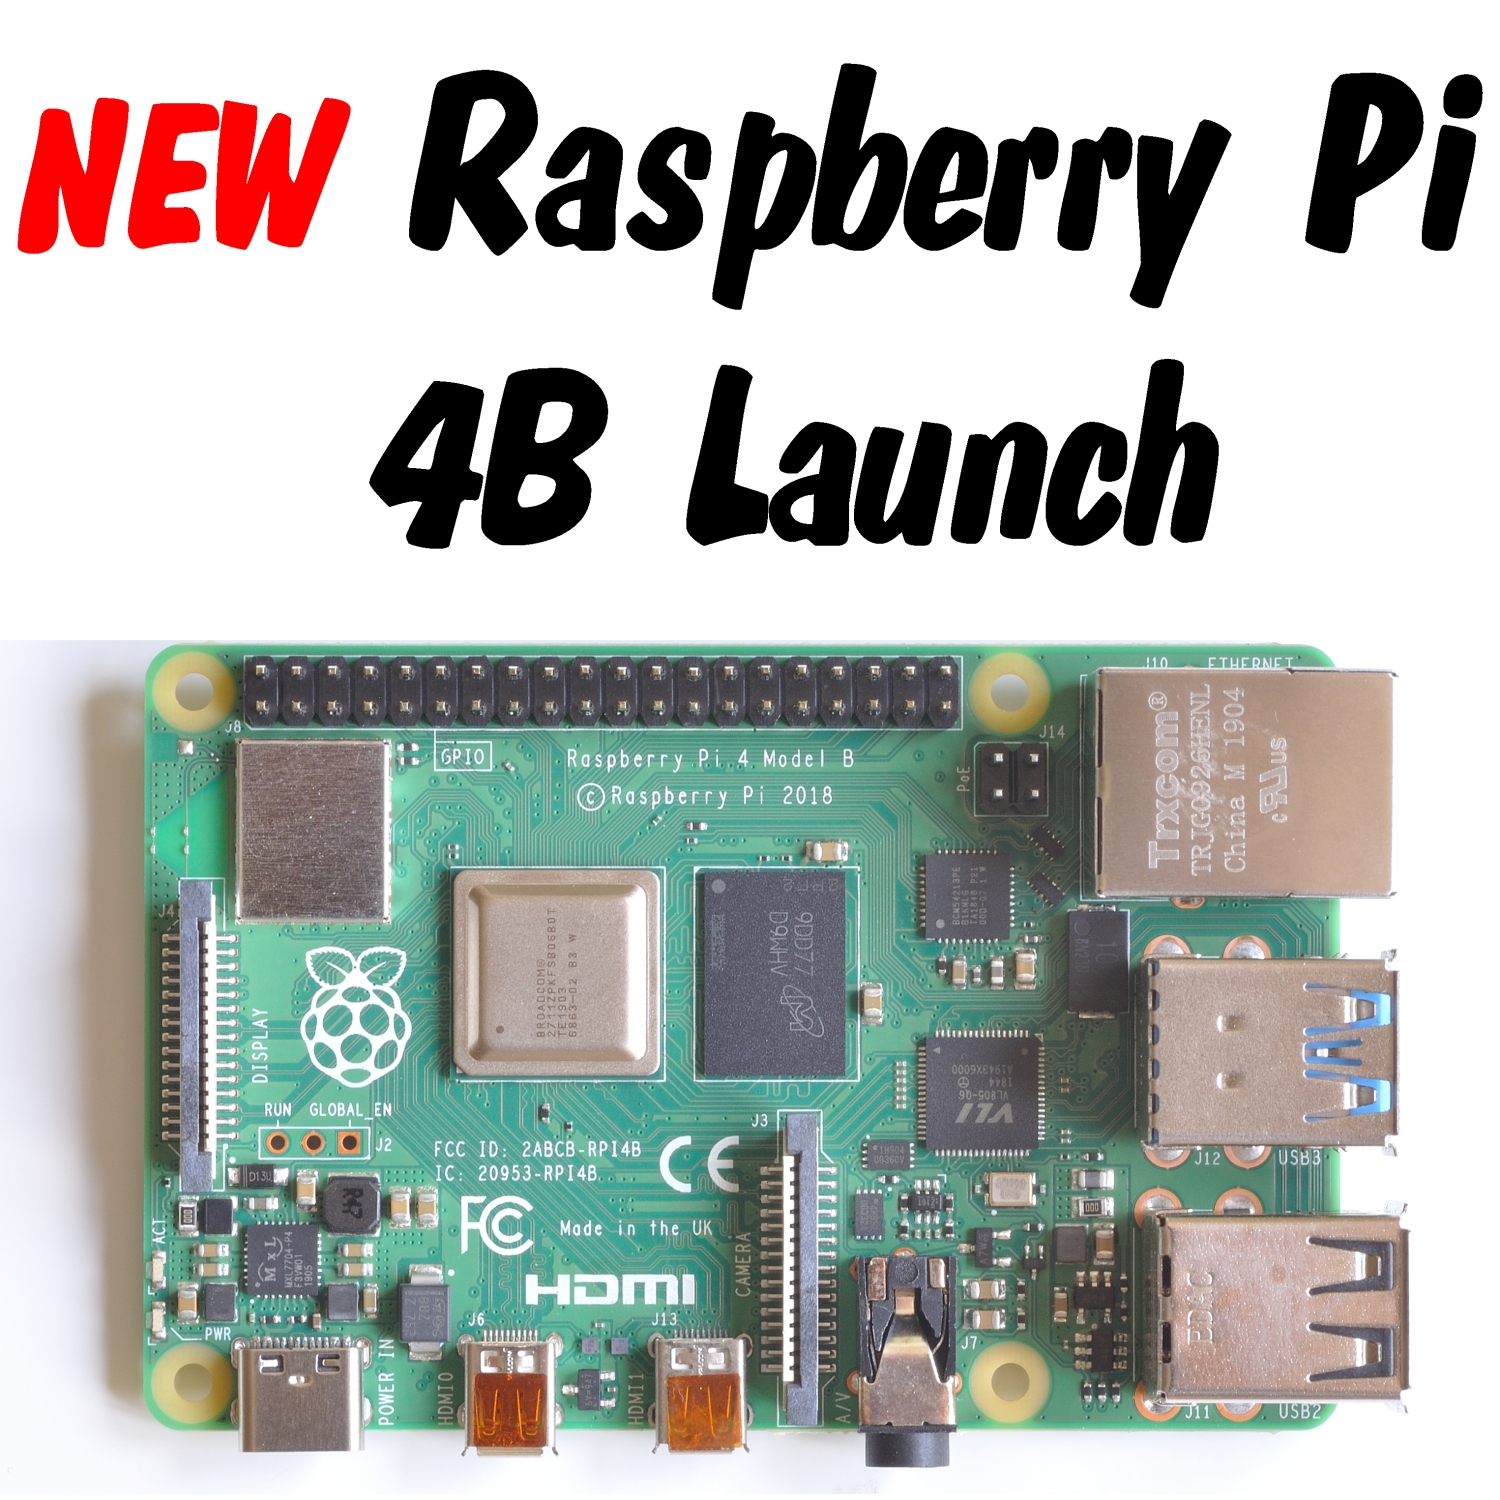 The Raspberry Pi Foundation unveils the Raspberry Pi 4